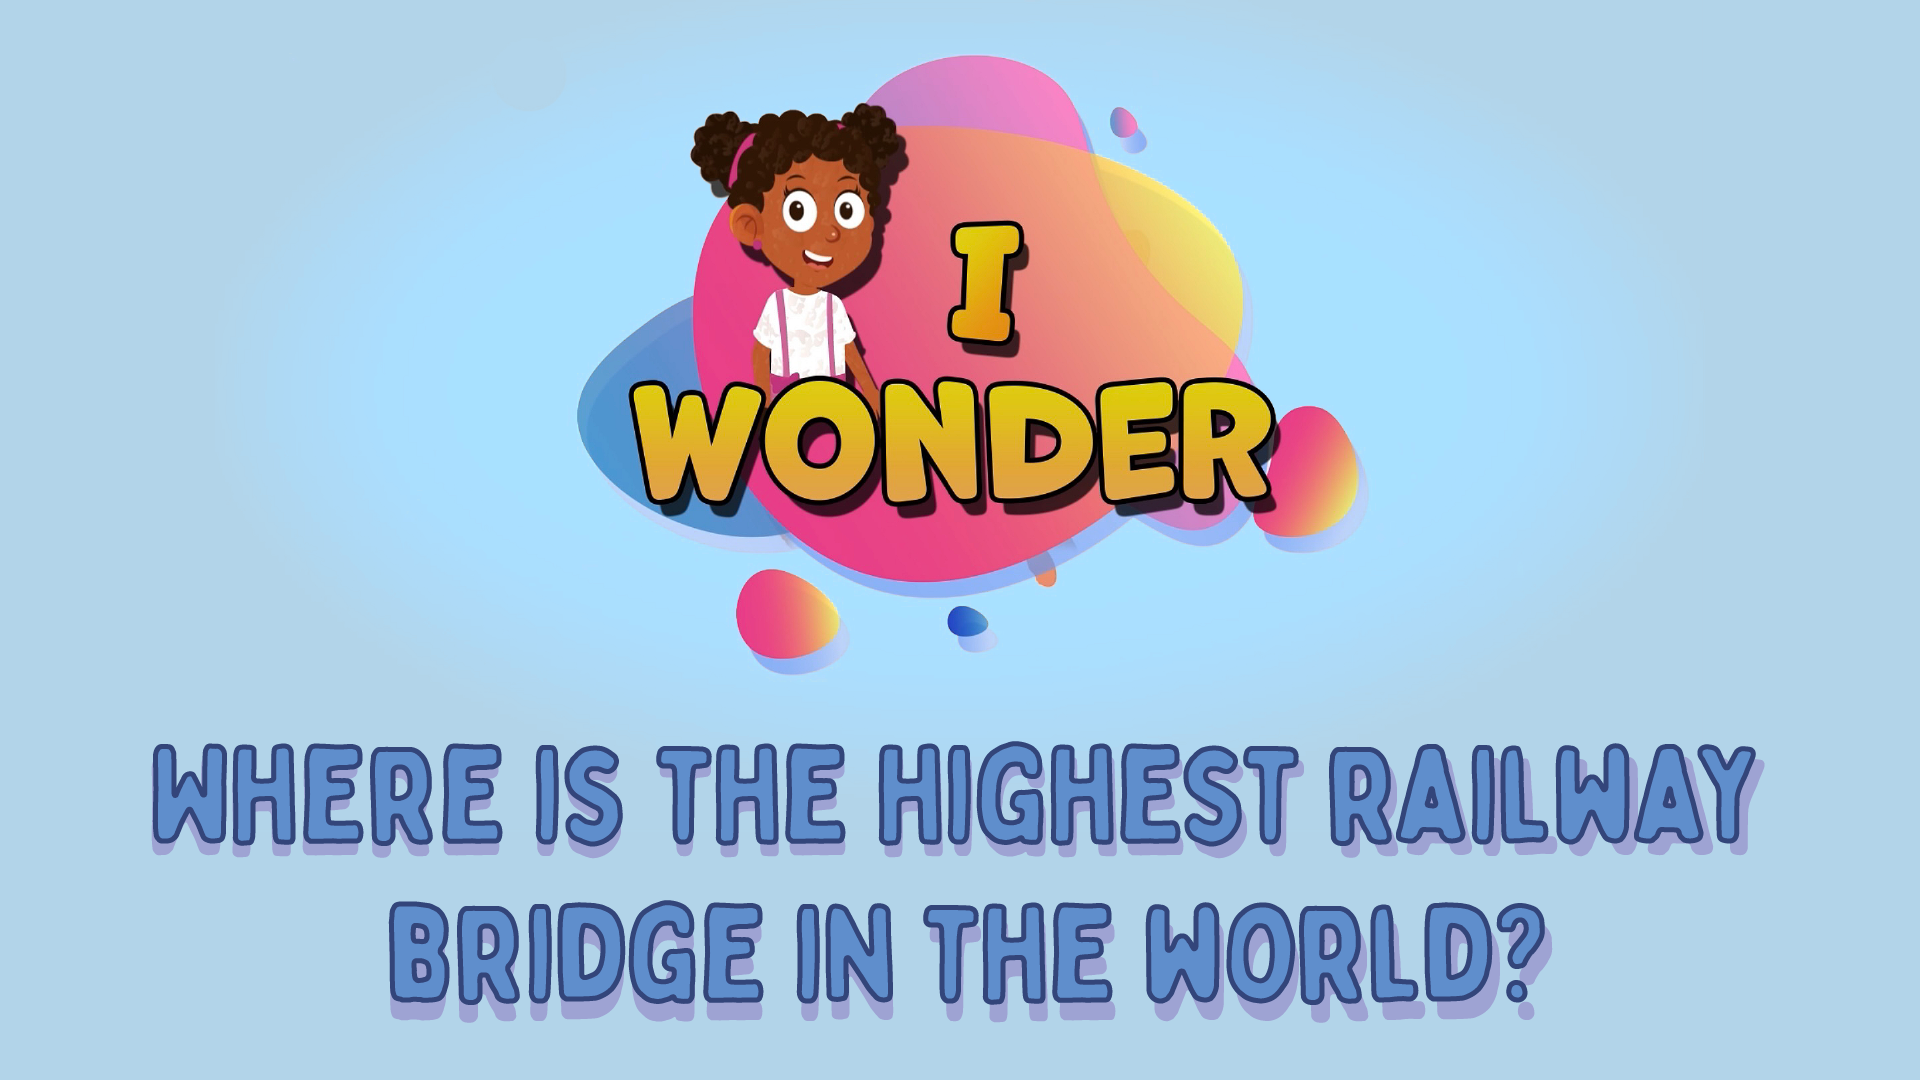 Where Is The Highest Railway Bridge In The World?